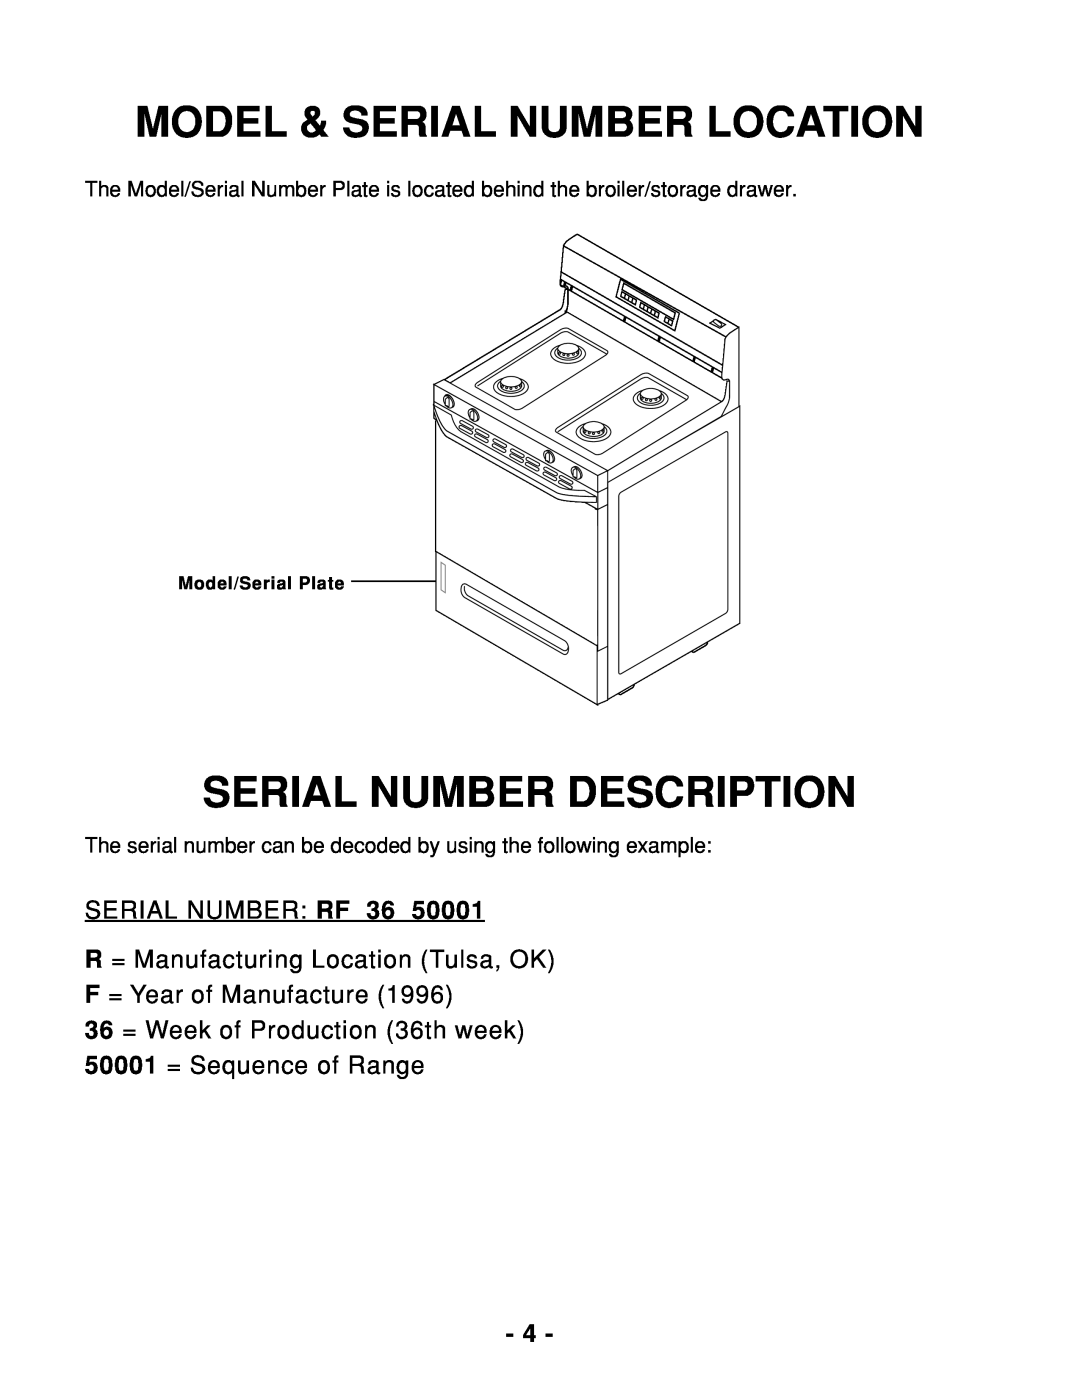 Whirlpool 465 manual Model & Serial Number Location, Serial Number Description, Serial Number Rf 